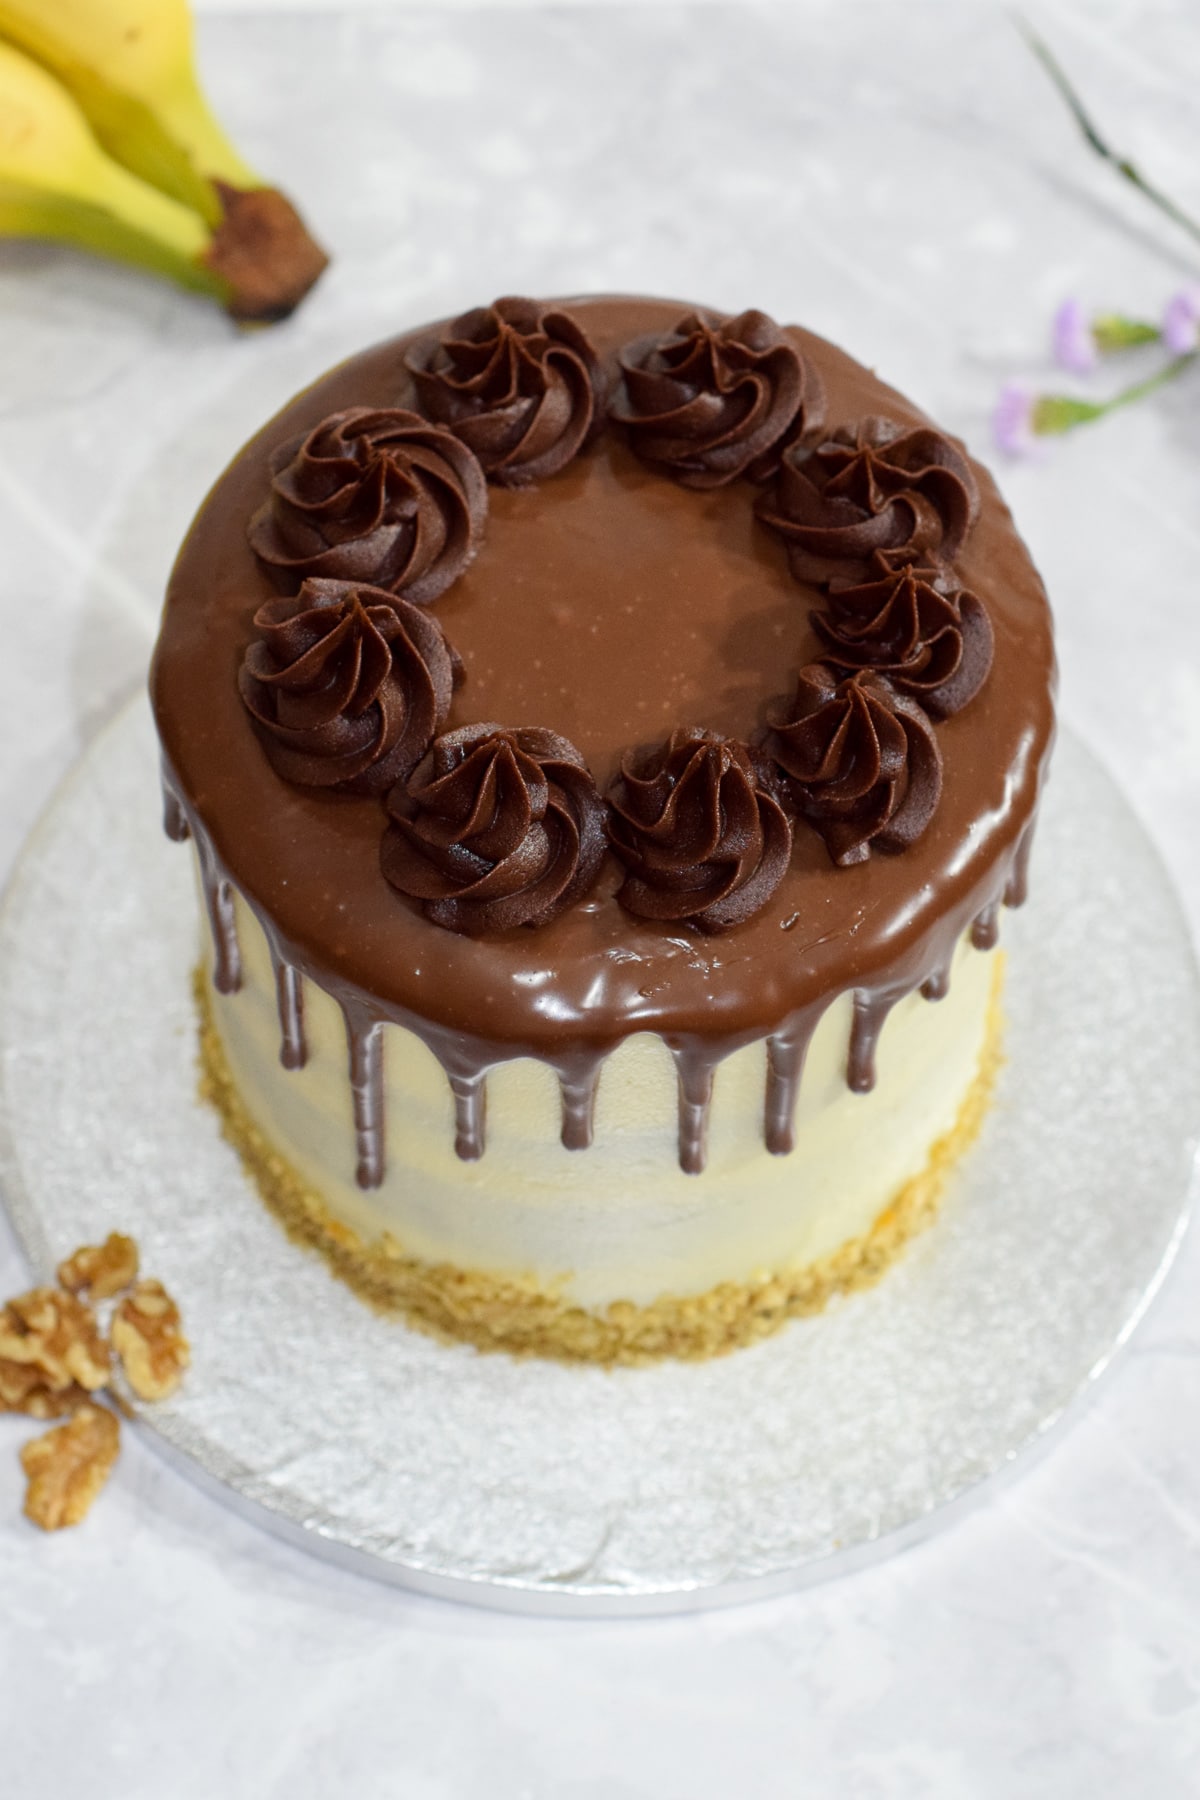 Banana walnut cake with vanilla cream cheese frosting and a milk chocolate ganache drip